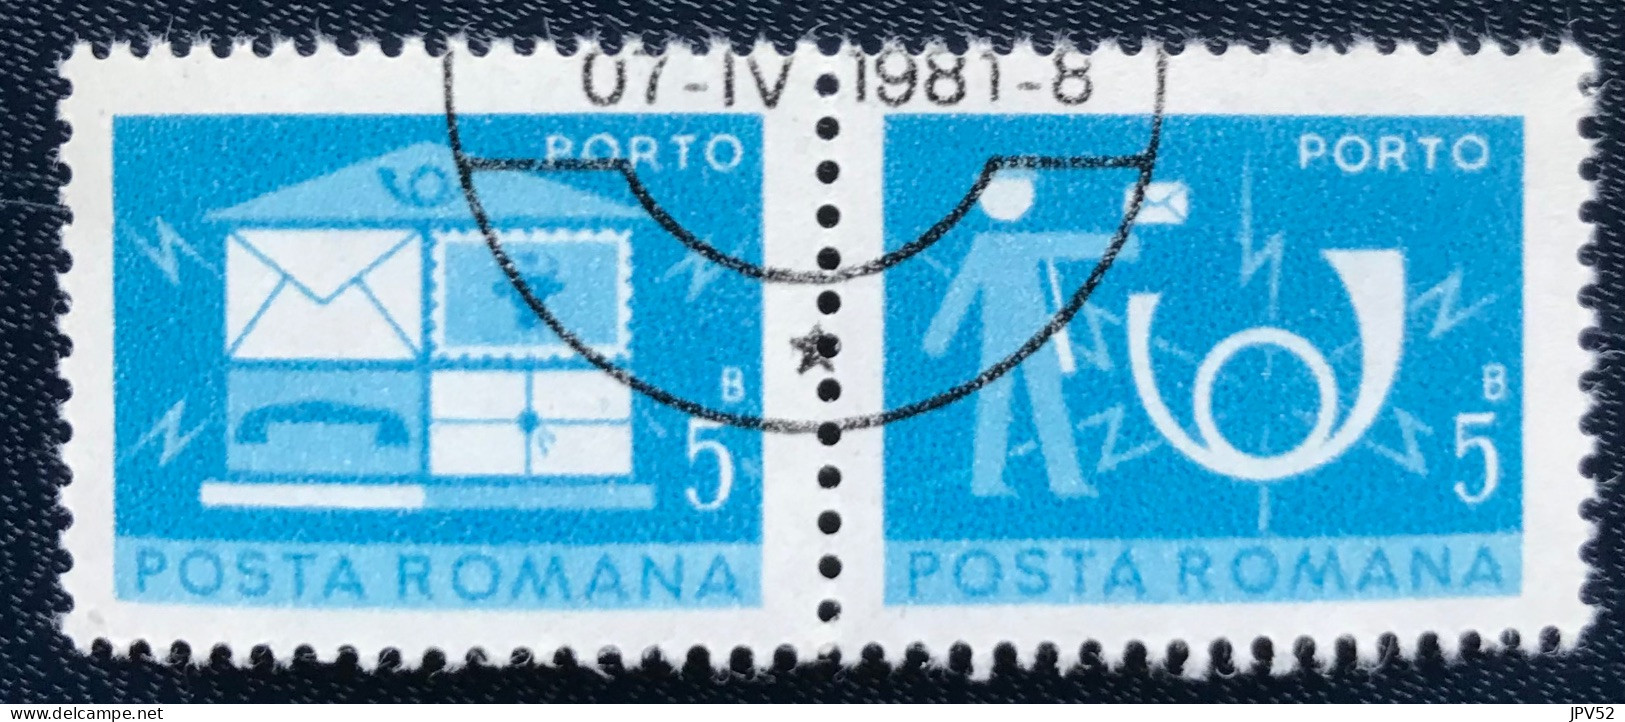 Romana - Roemenië - C14/54 - 1974 - (°)used - Michel 119 - Brievenbus & Postbode & Posthoorn - Portomarken